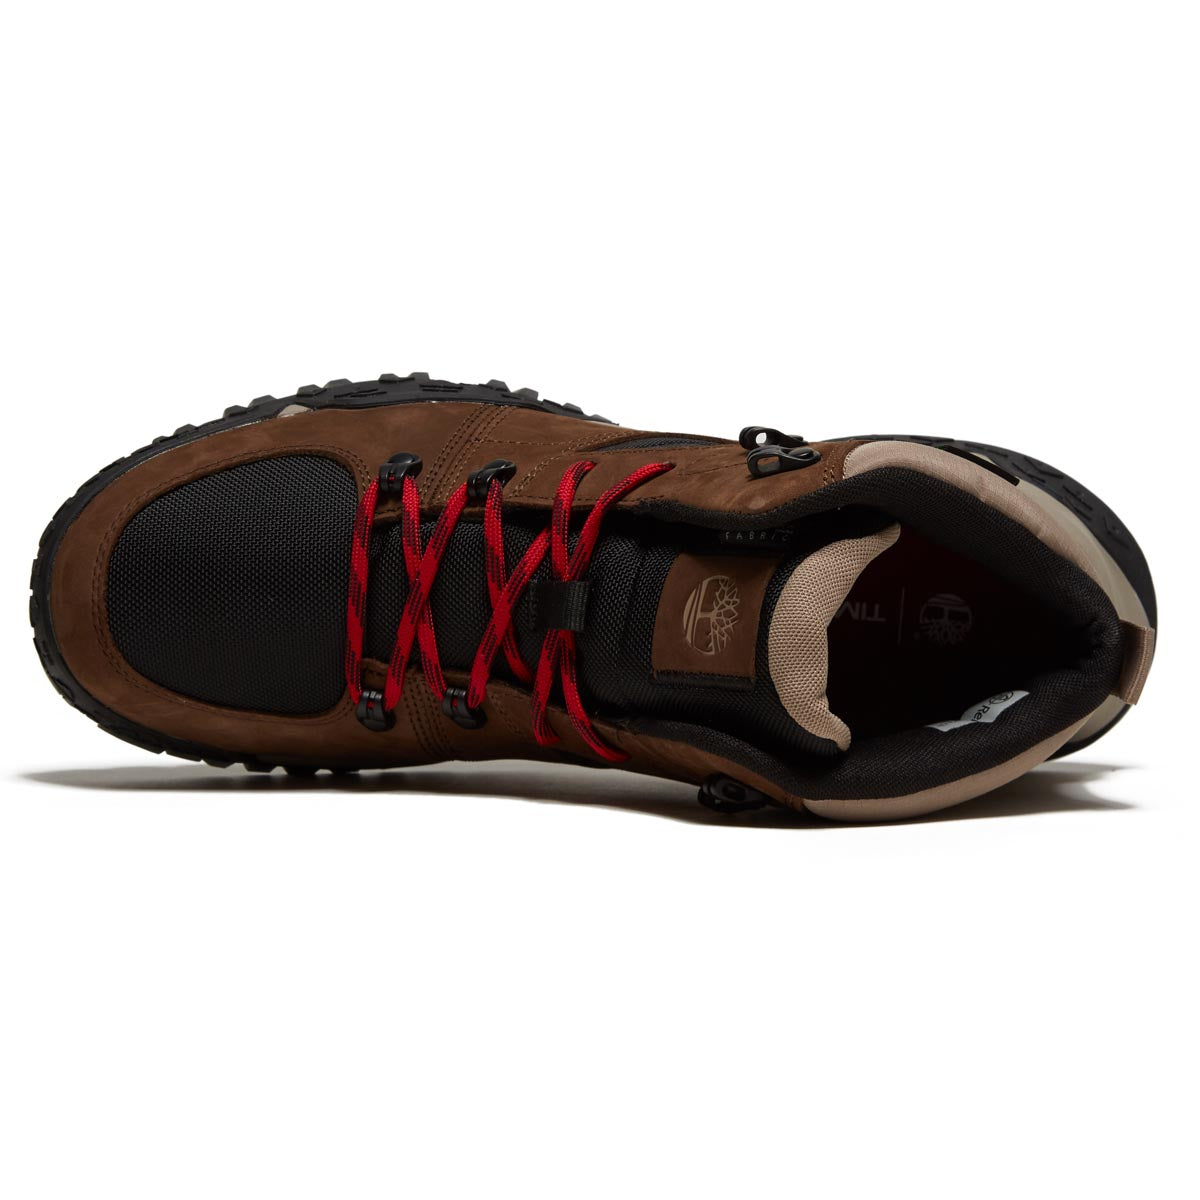 Timberland Motion Scramble Mid Lace Up Wp Shoes - Dark Brown Nubuck image 3